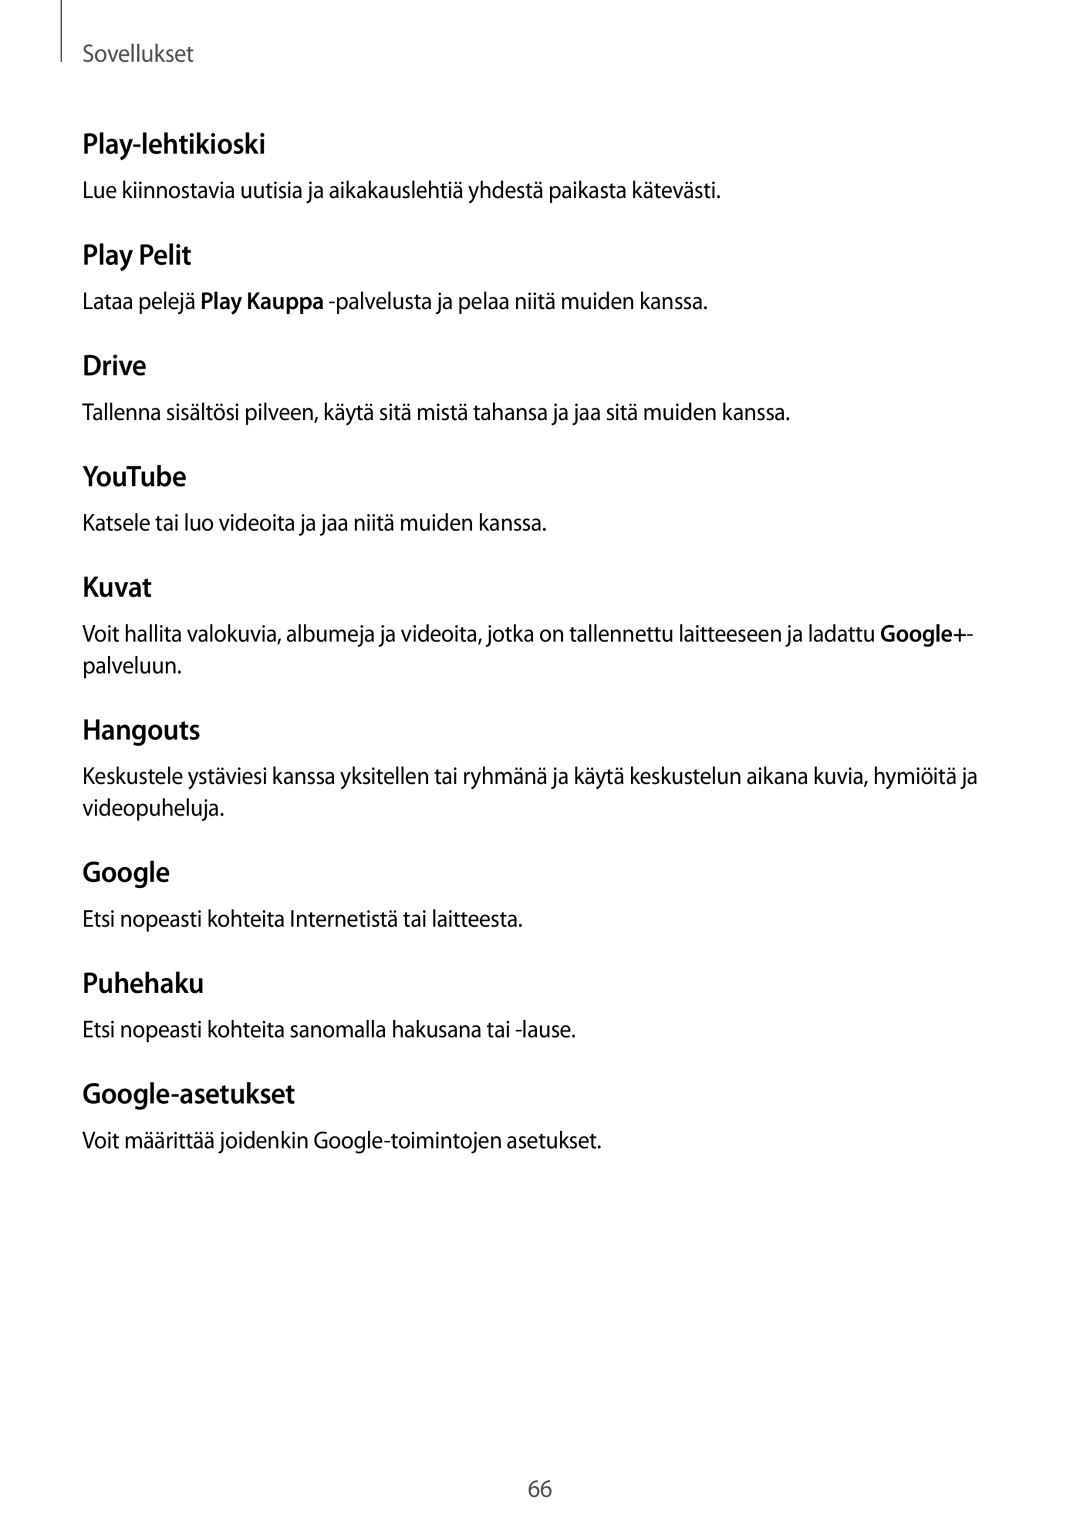 Samsung SM-J500FZDANEE manual Play-lehtikioski, Play Pelit, Drive, YouTube, Kuvat, Hangouts, Puhehaku, Google-asetukset 